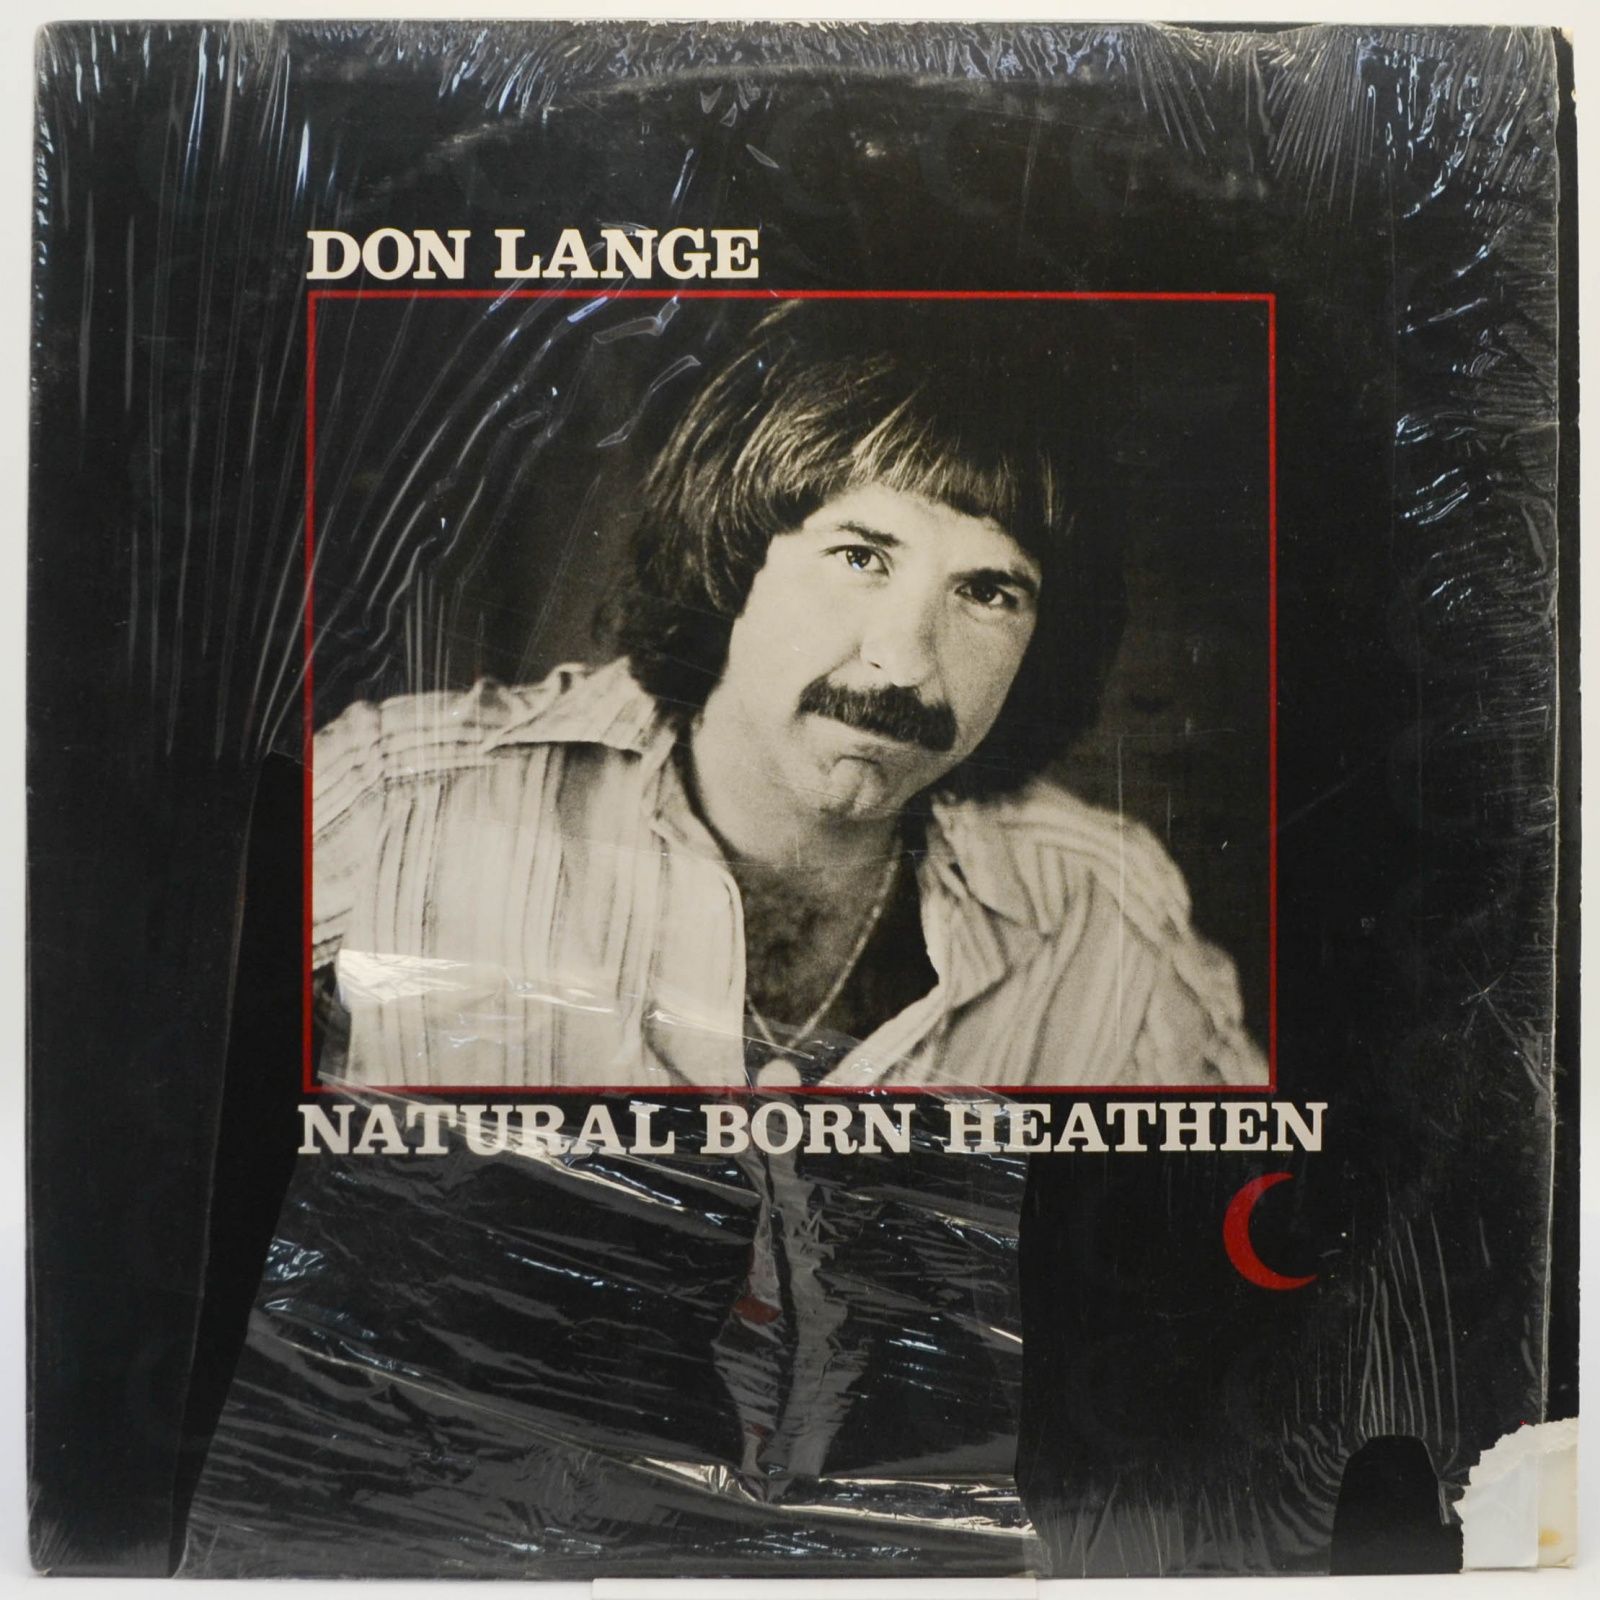 Don Lange — Natural Born Heathen, 1978